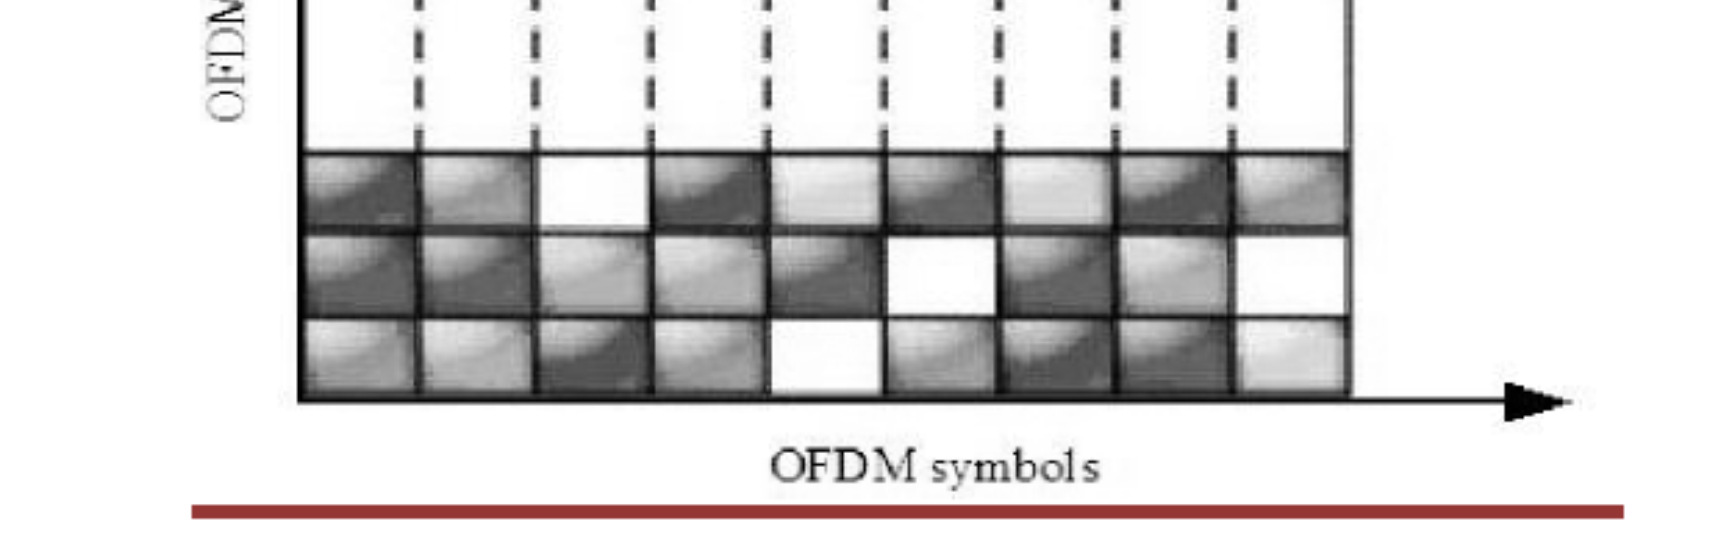 communications). Και αυτό διότι επιτρέπει το διαχωρισµό των χρονικών και φασµατικών πόρων σε OFDM σύµβολα και OFDM subcarriers όπως φαίνεται και από το σχήµα 2.10. Σχήµα 2.